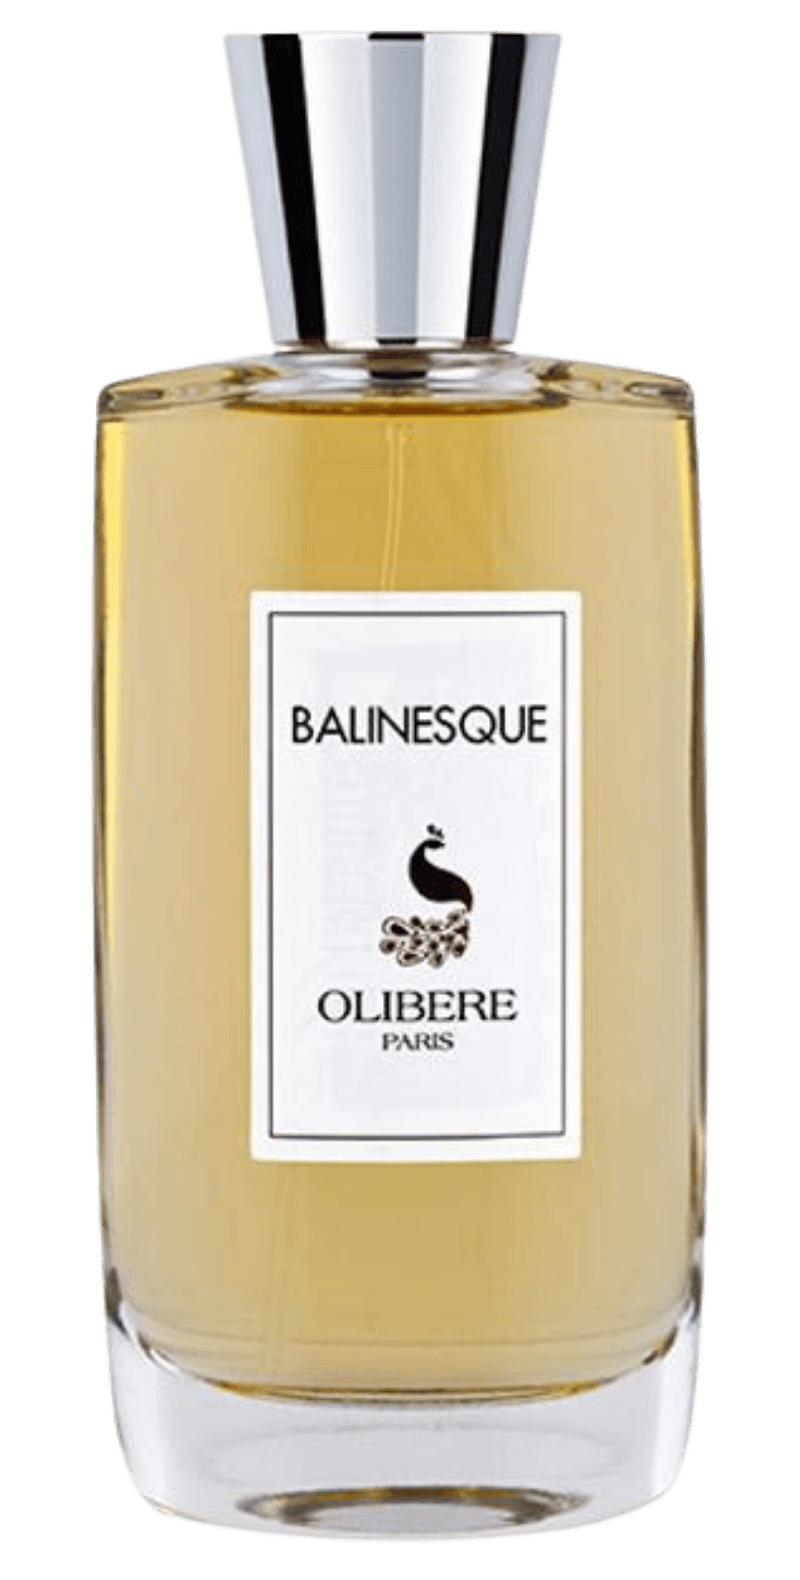 's Olibere Balinesque - Bellini's Skin and Parfumerie 